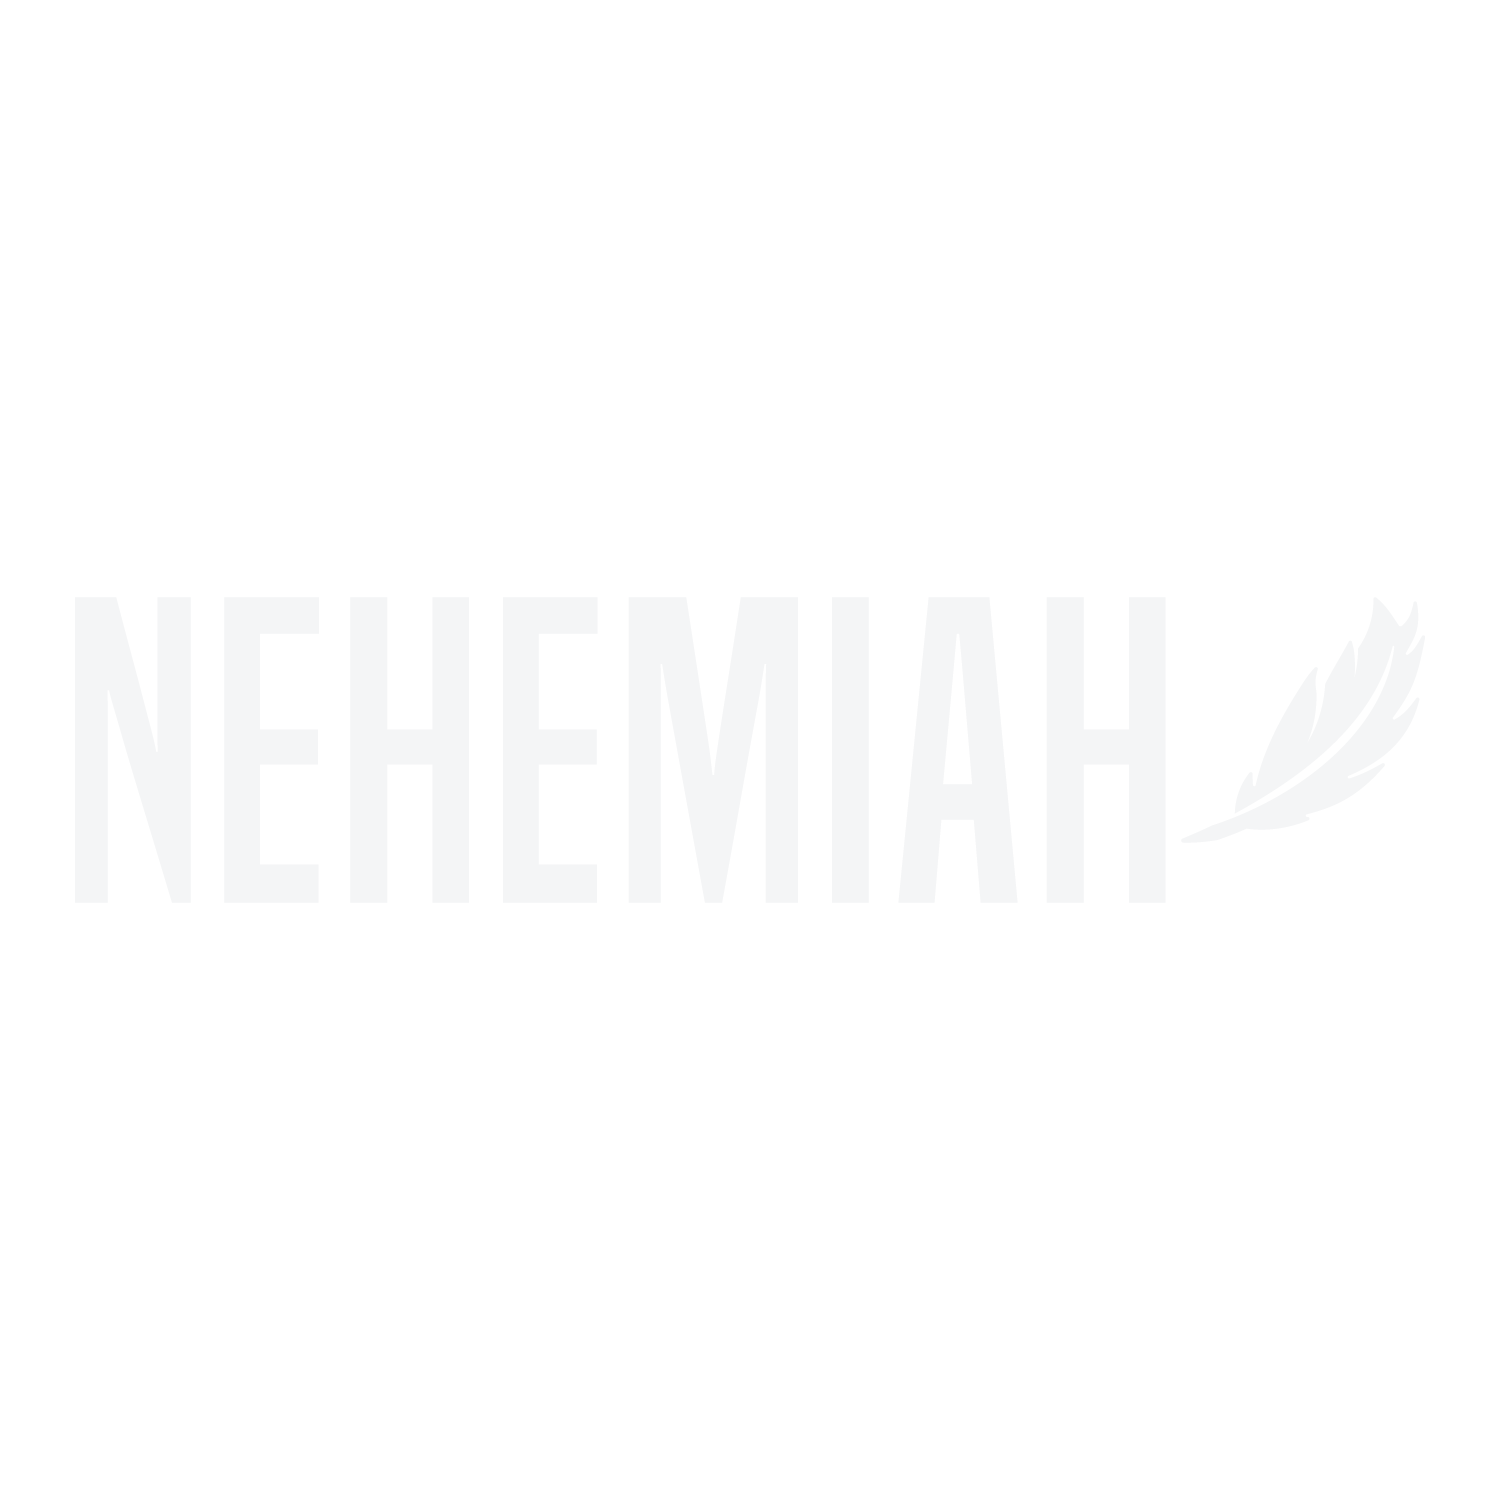 Nehemiah Abilene